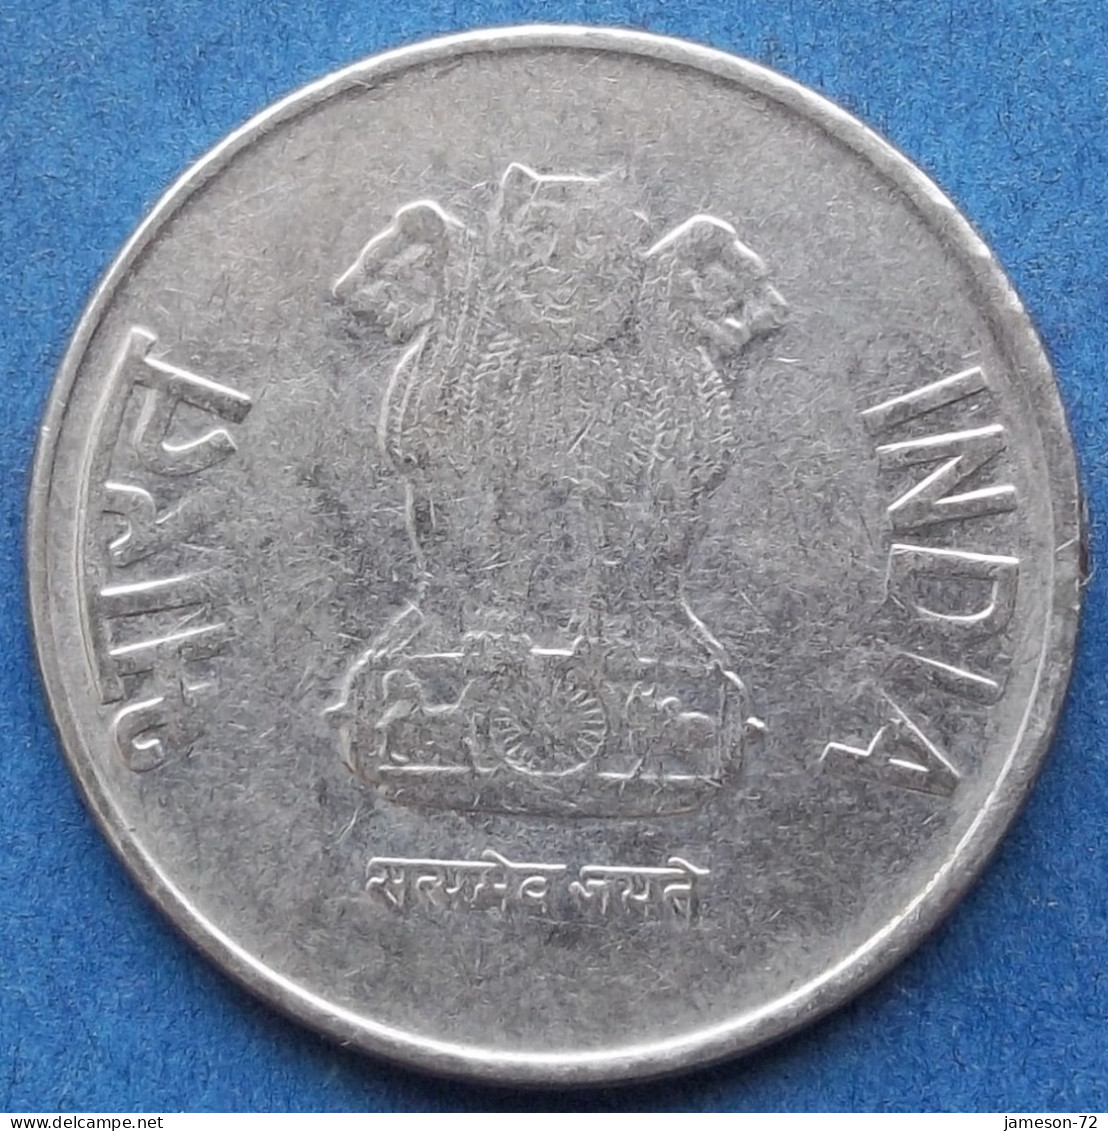 INDIA - 2 Rupees 2012 "Lotus Flowers" KM# 395 Republic Decimal Coinage (1957) - Edelweiss Coins - Géorgie